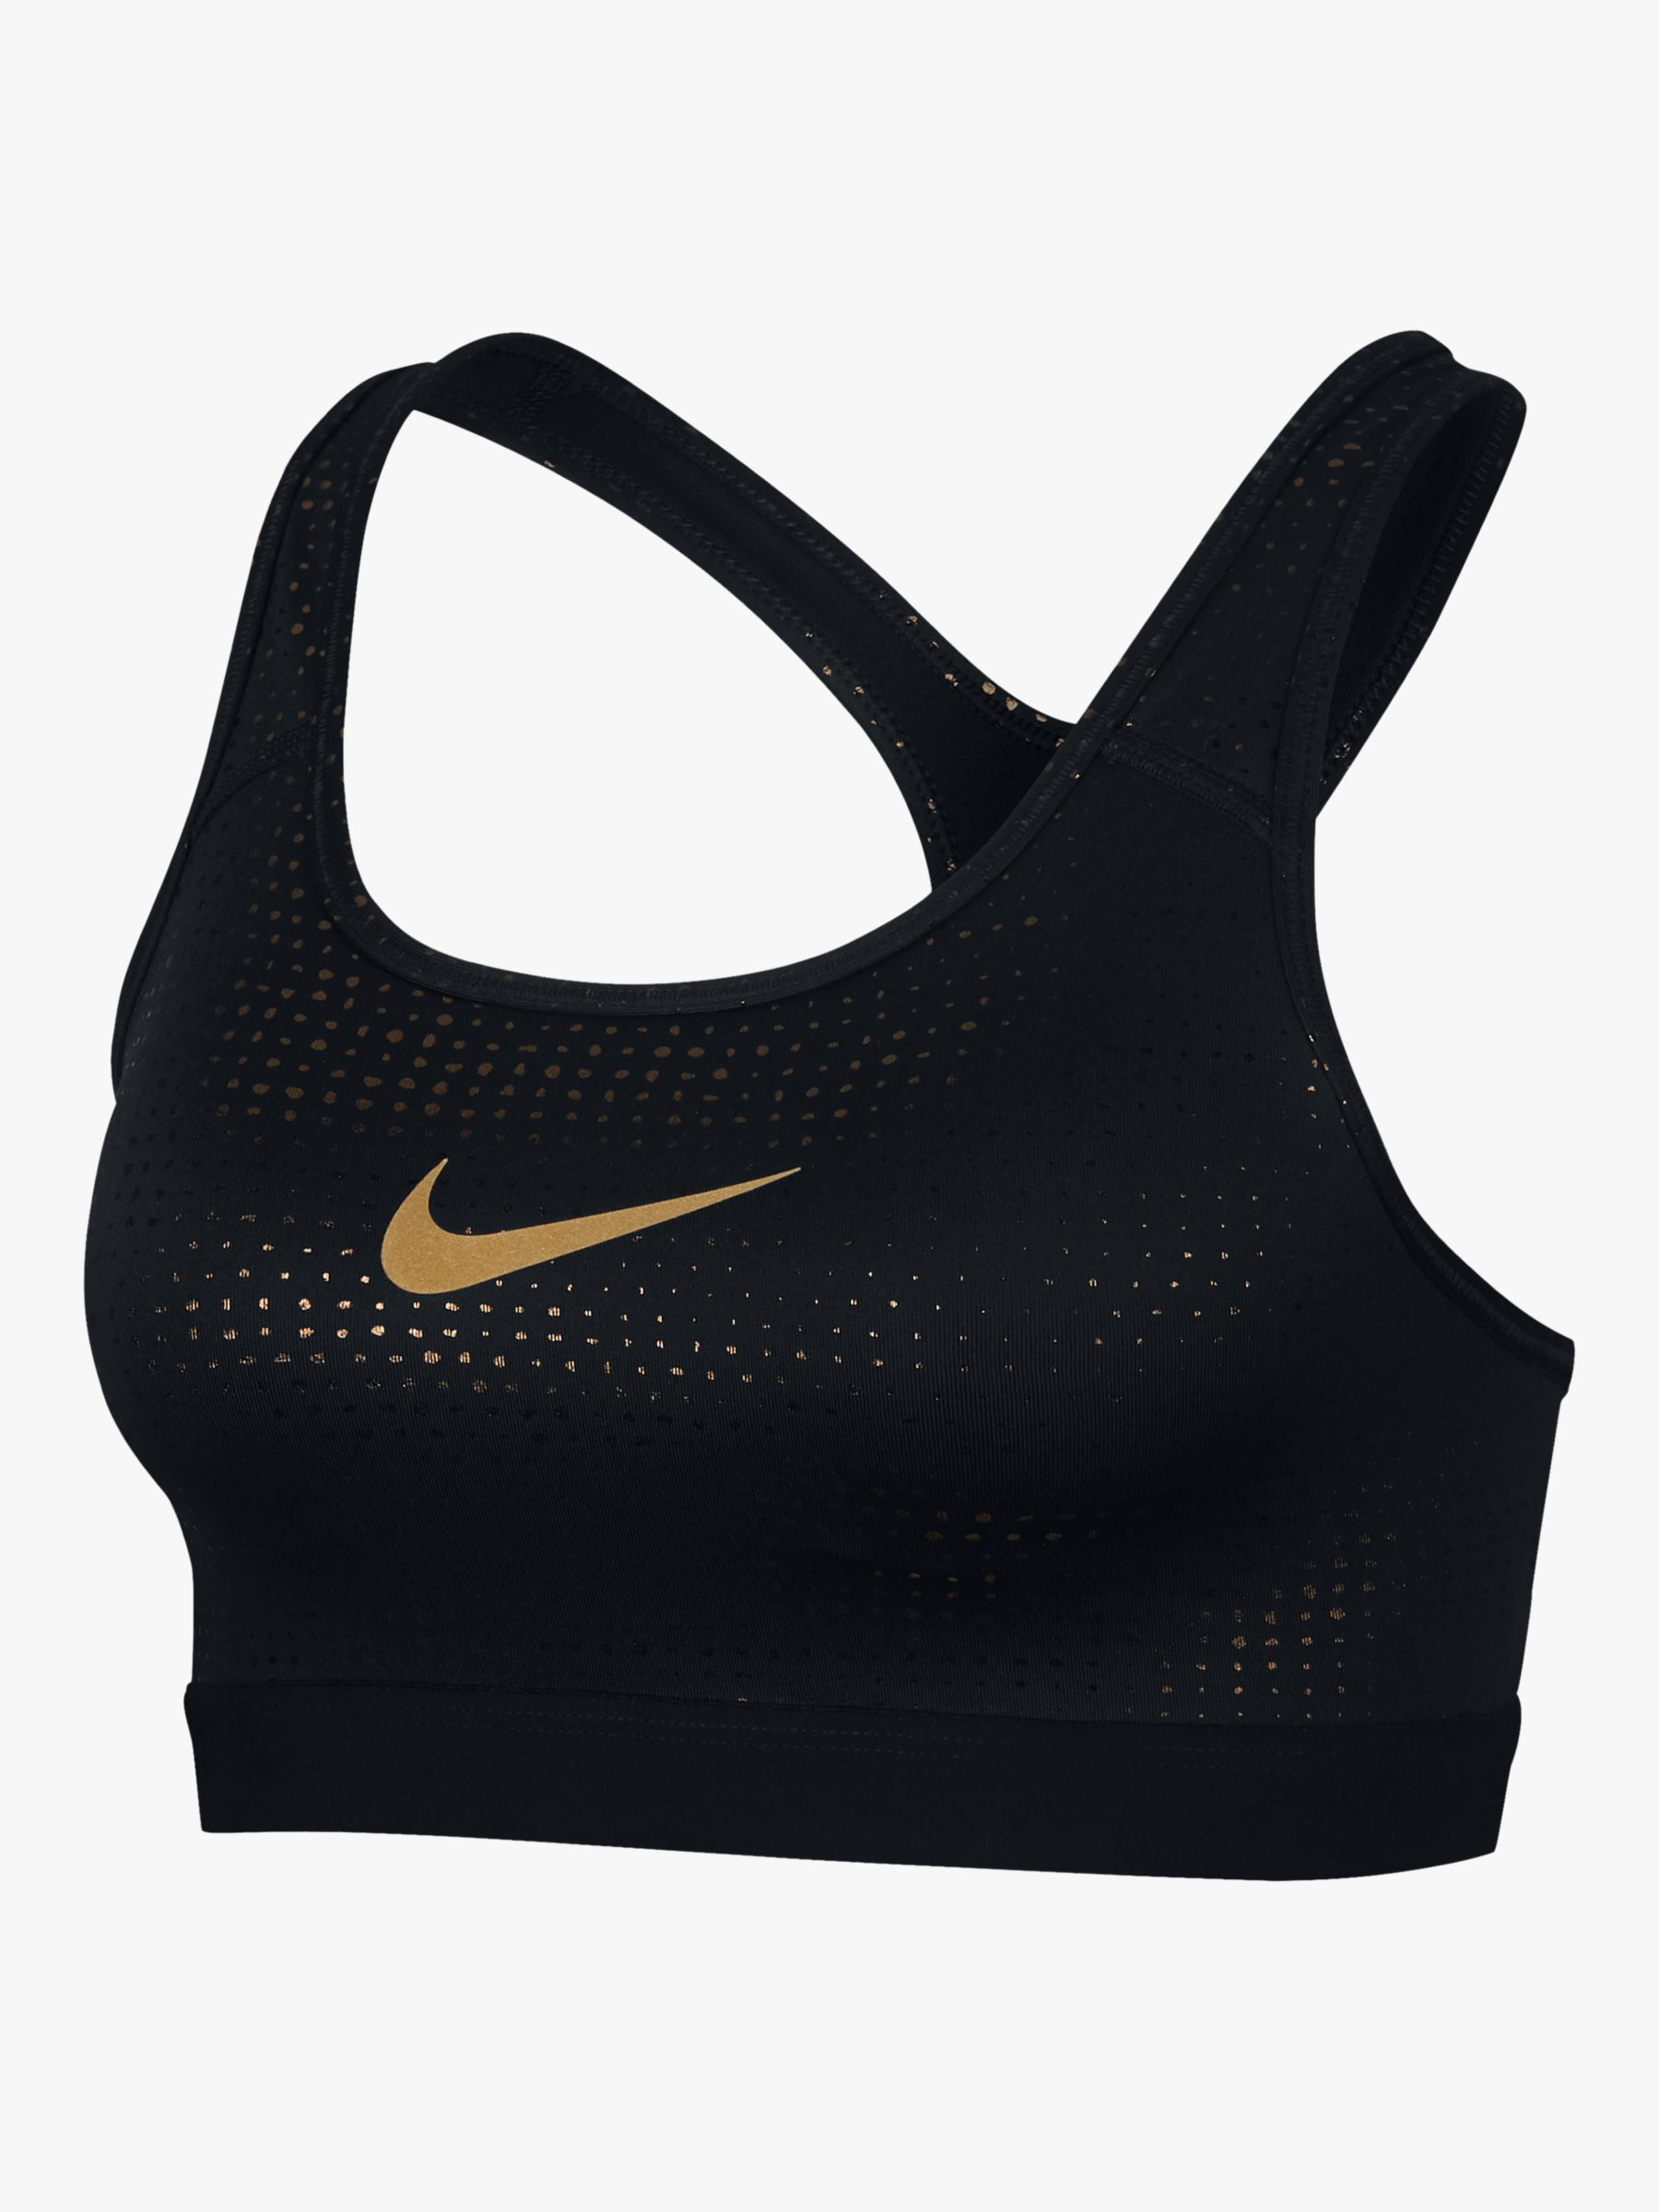 Women's Nike Gold Black shiny Sports Bra S